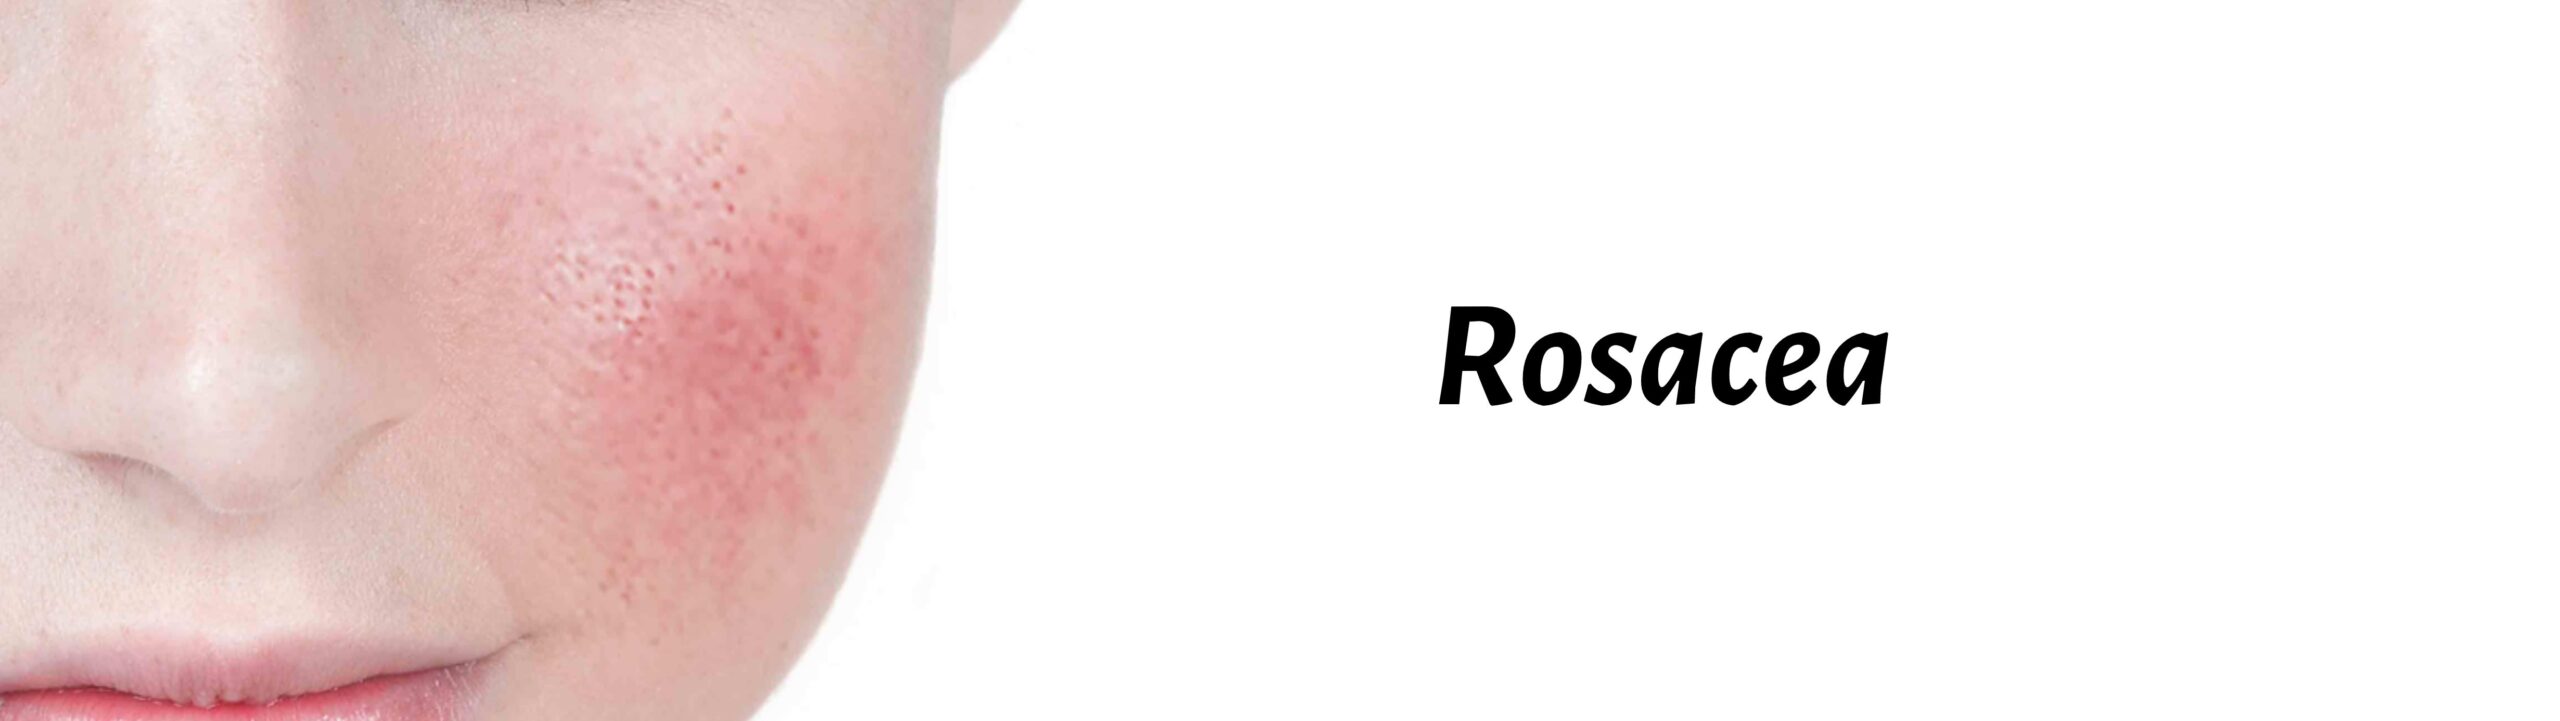 Rosacea